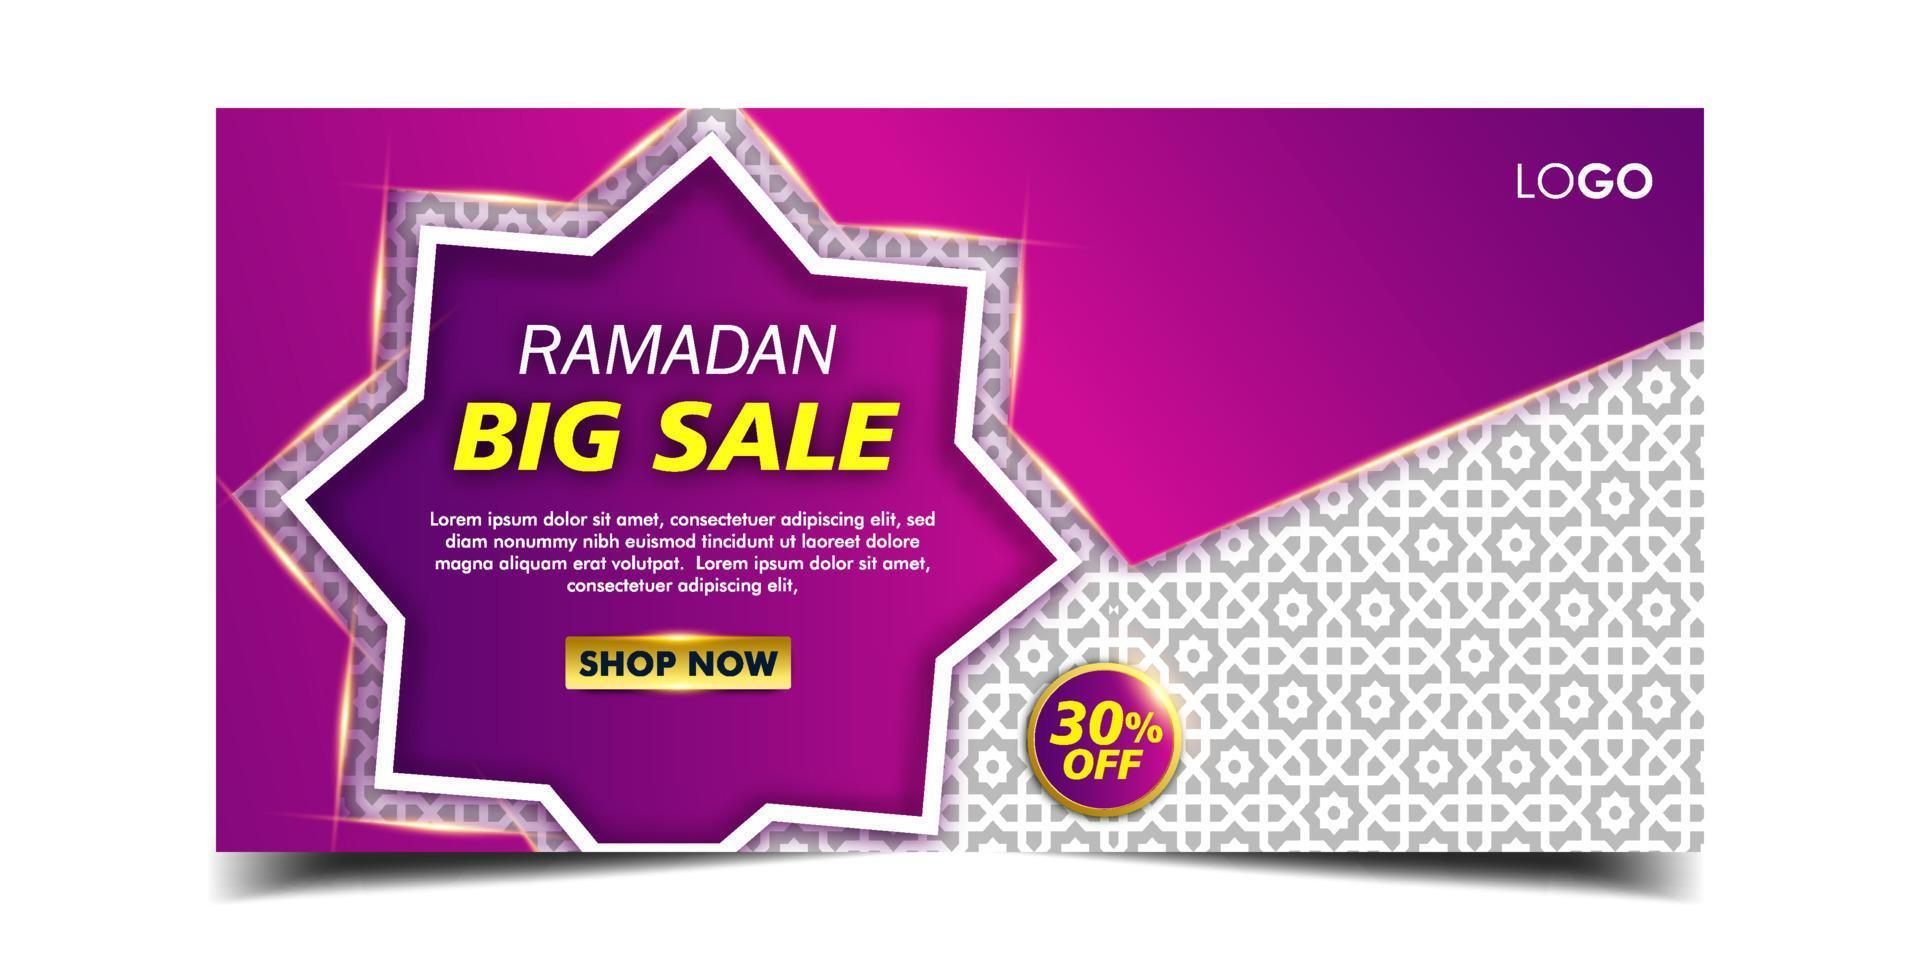 Ramadan sale horizontal banner template vector